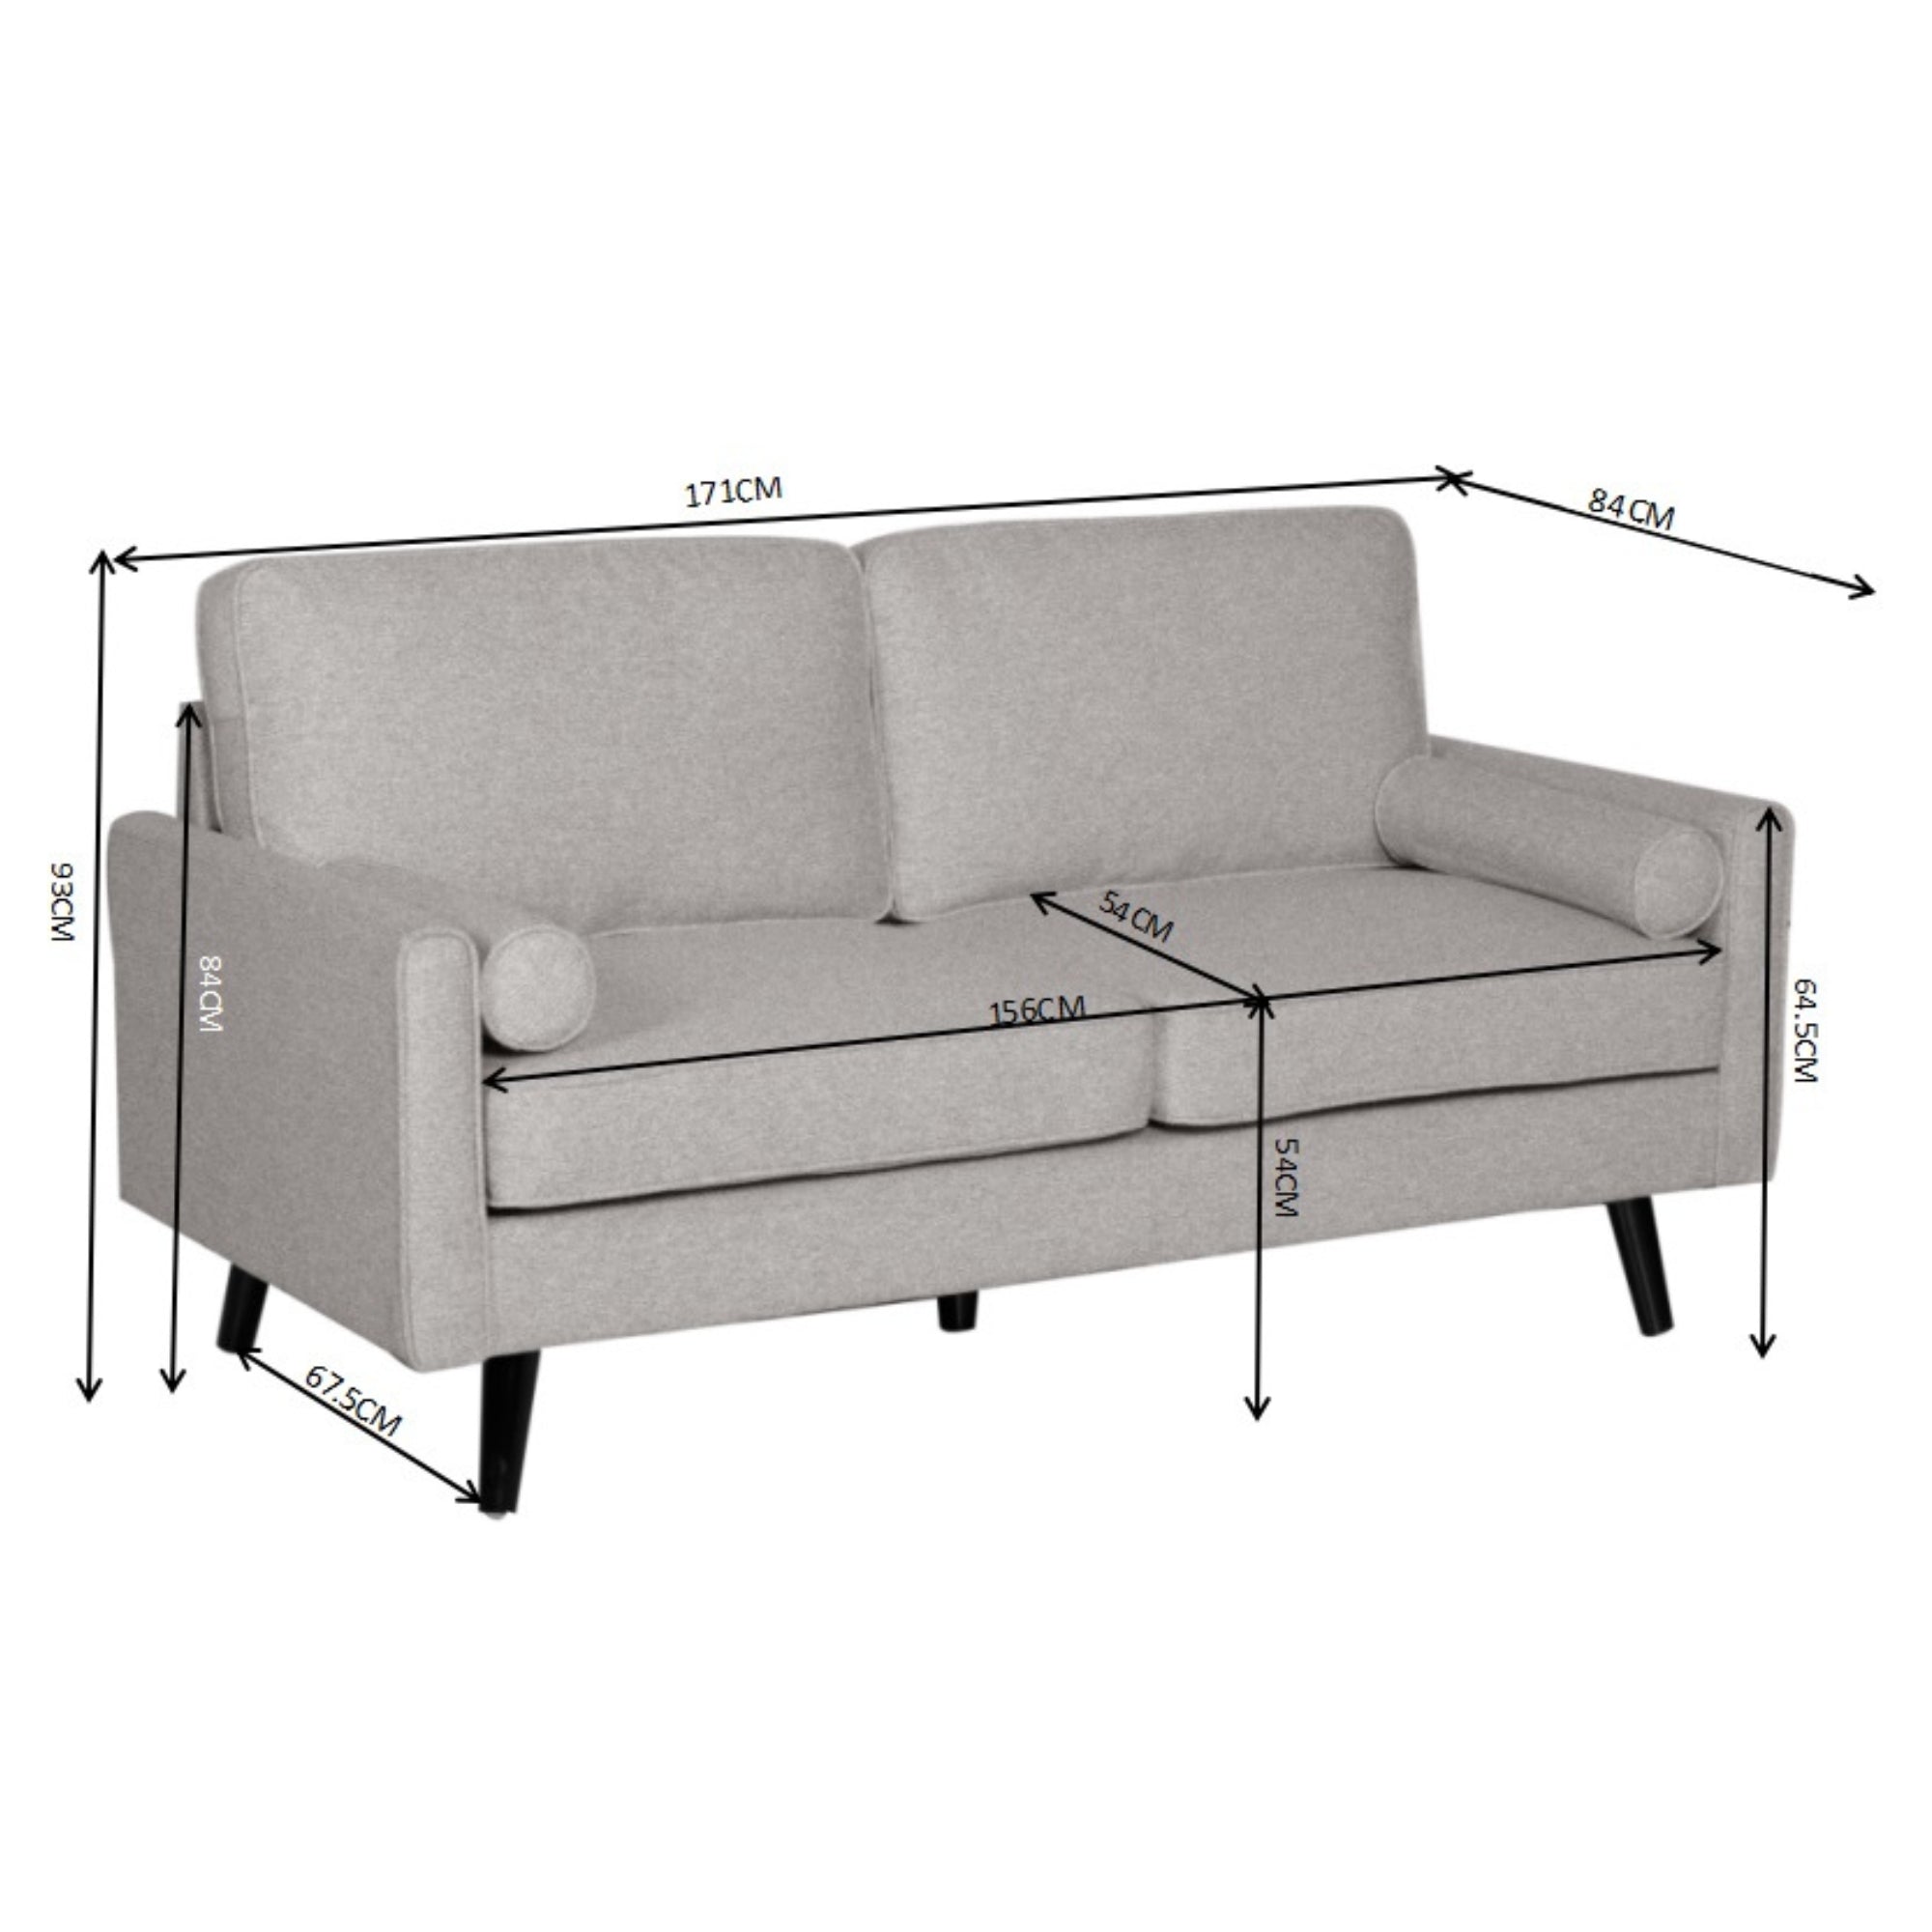 Light Grey Compact Fabric Sofa Set, 2+2.5 Seater, Scandinavian Style